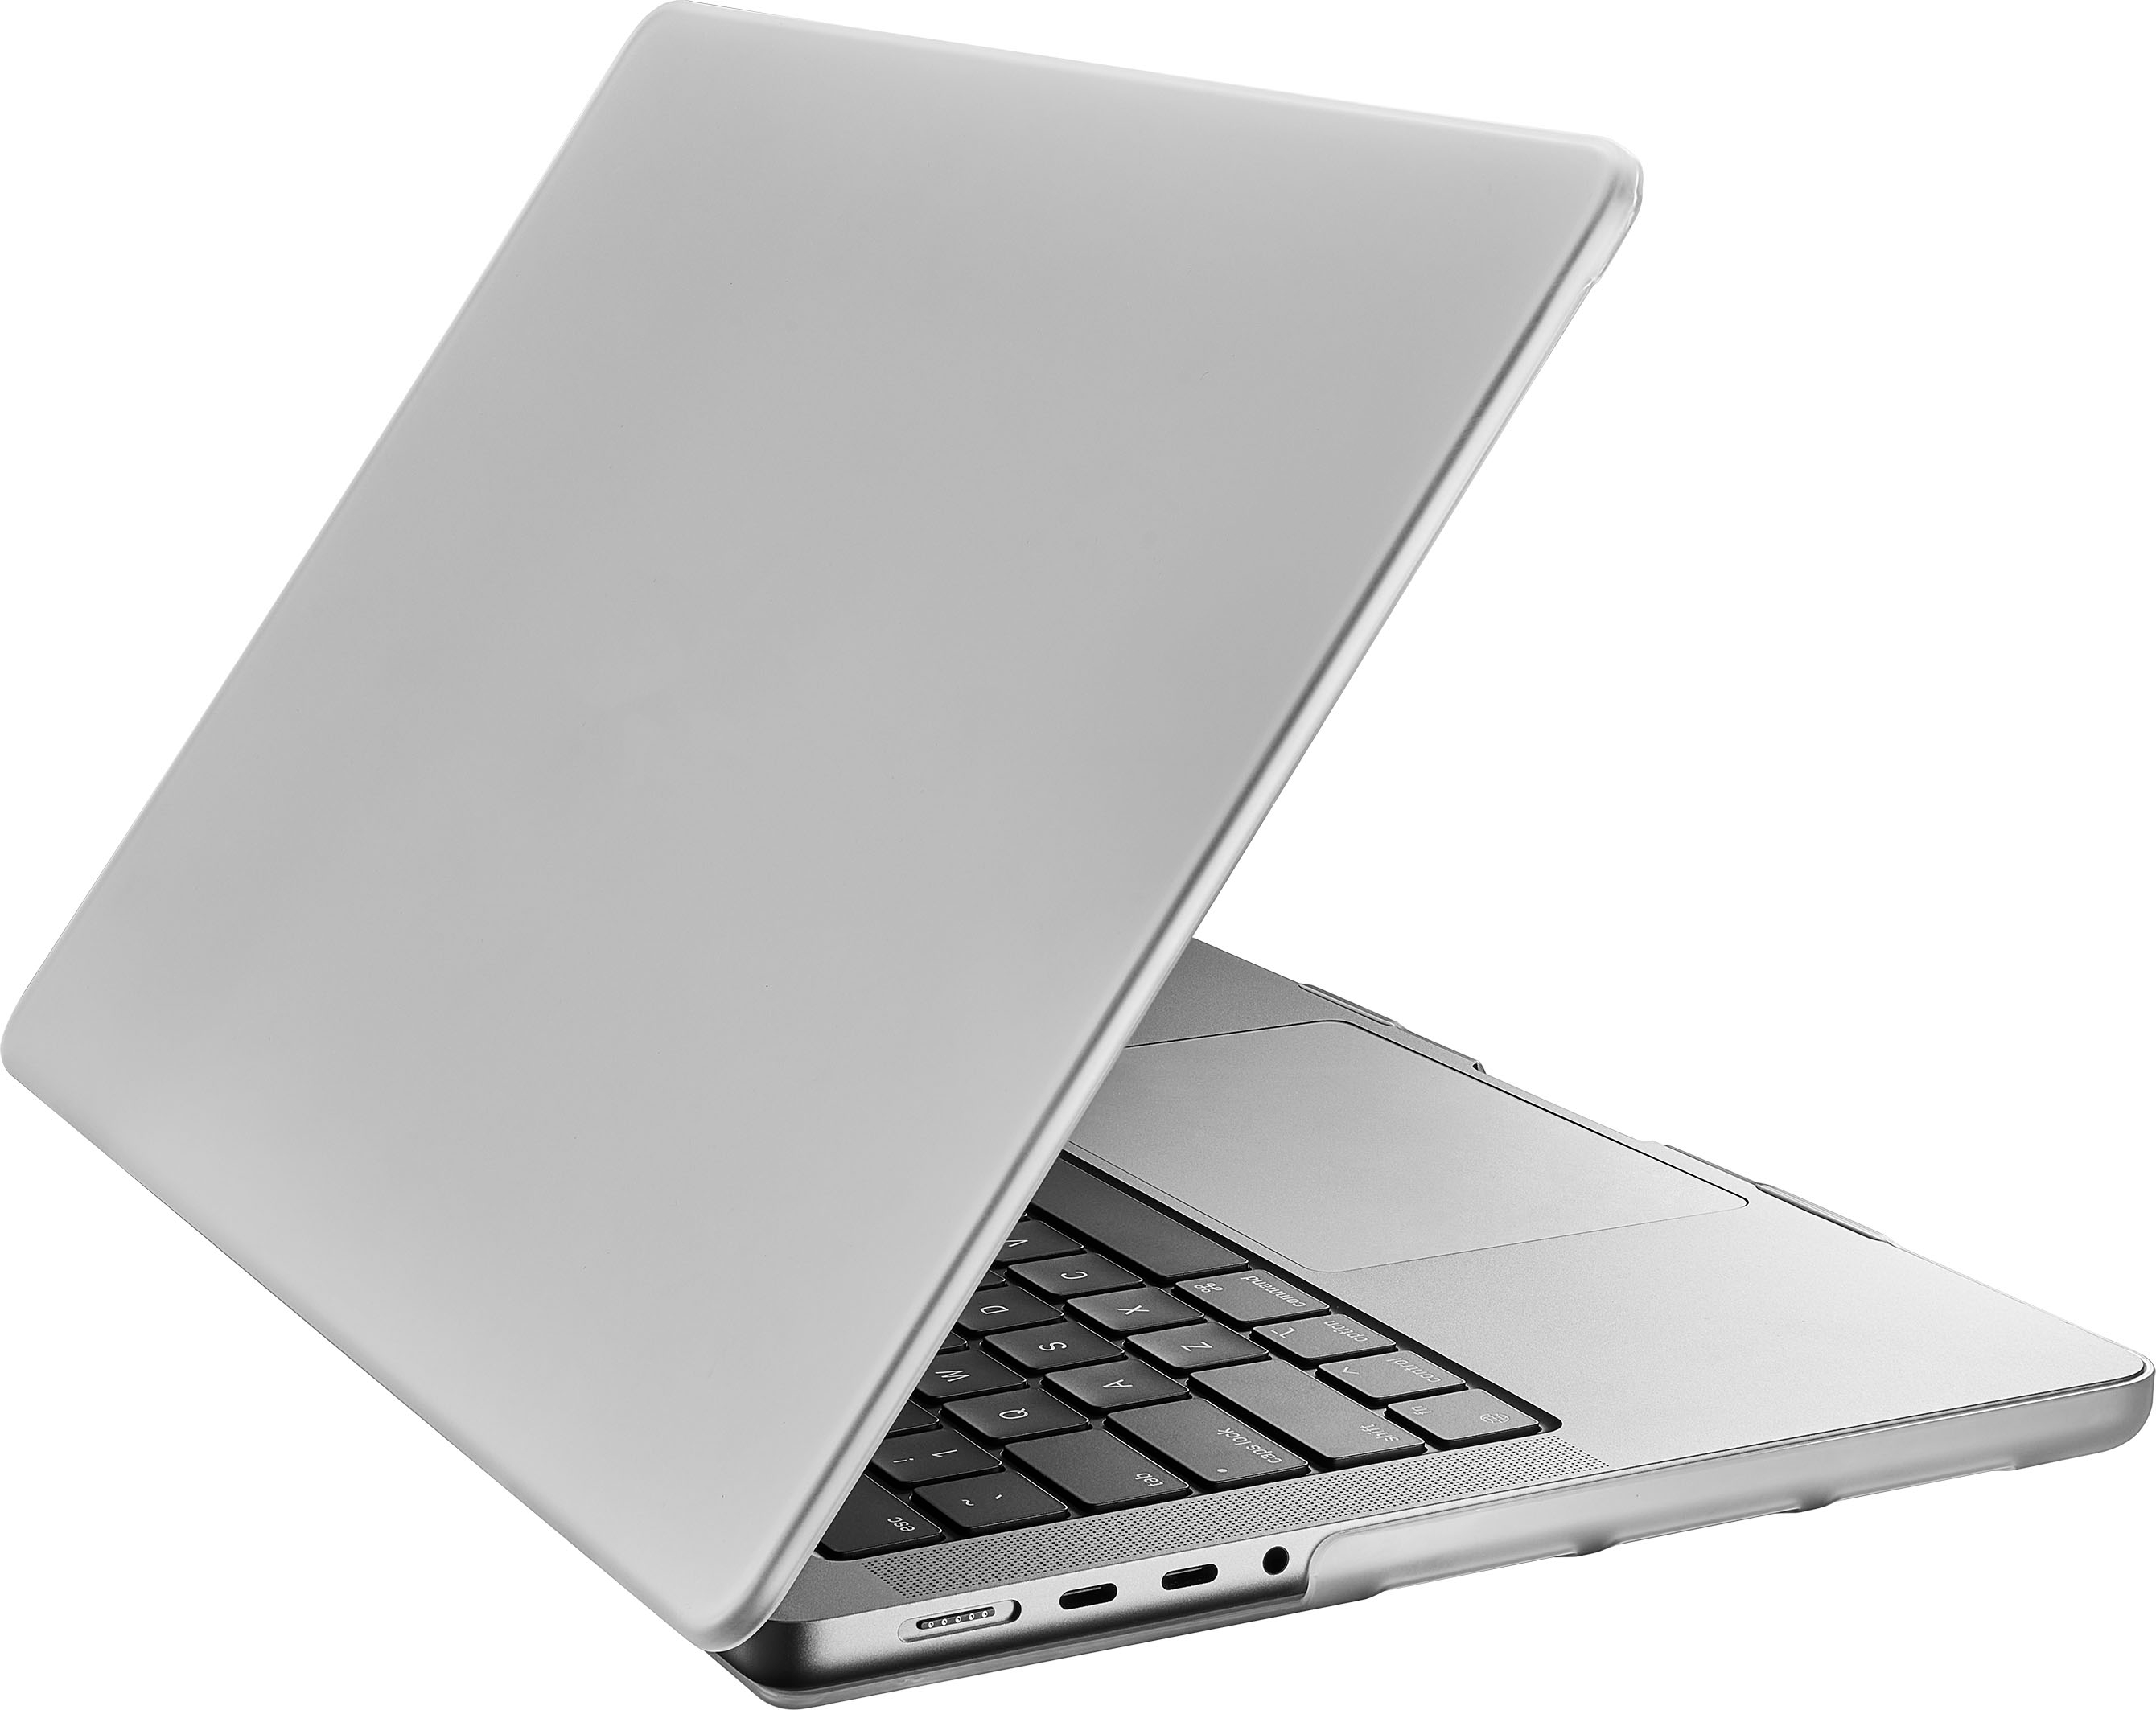 Best Lightweight Designer Laptop & Macbook Covers, Cases and